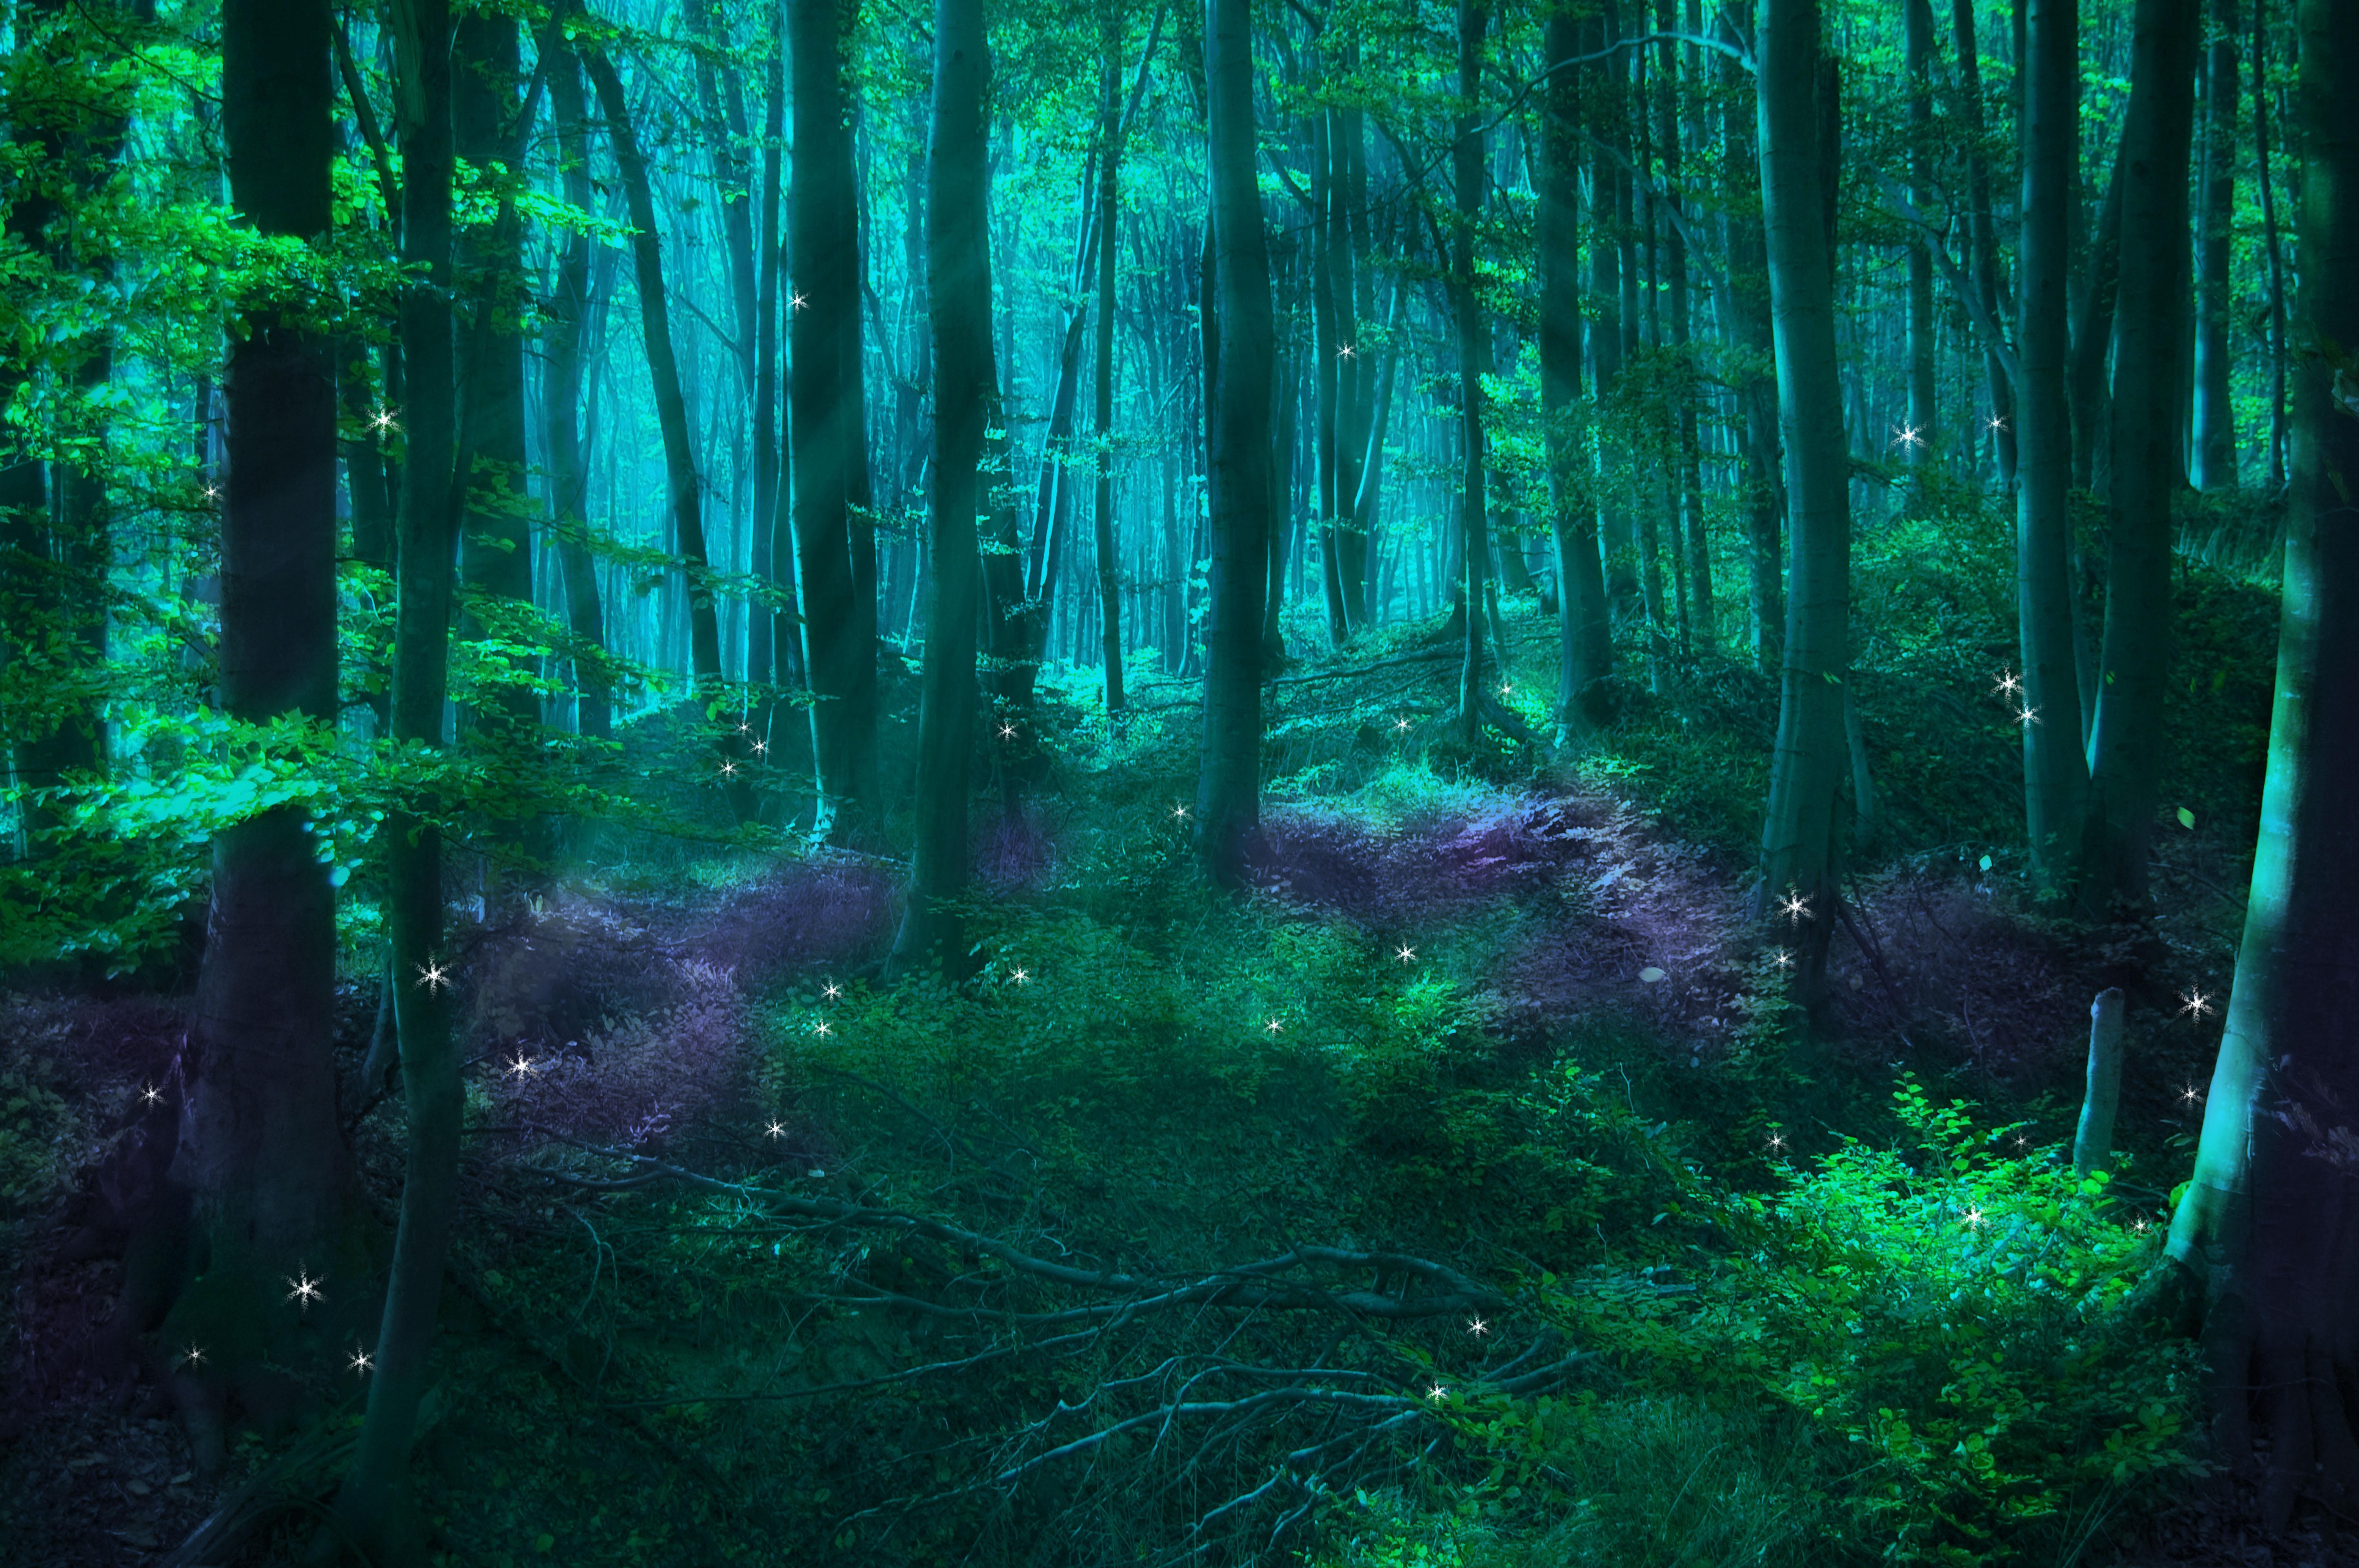 6016 x 4000 · jpeg - Enchanted Forest Backgrounds Free Download | PixelsTalk